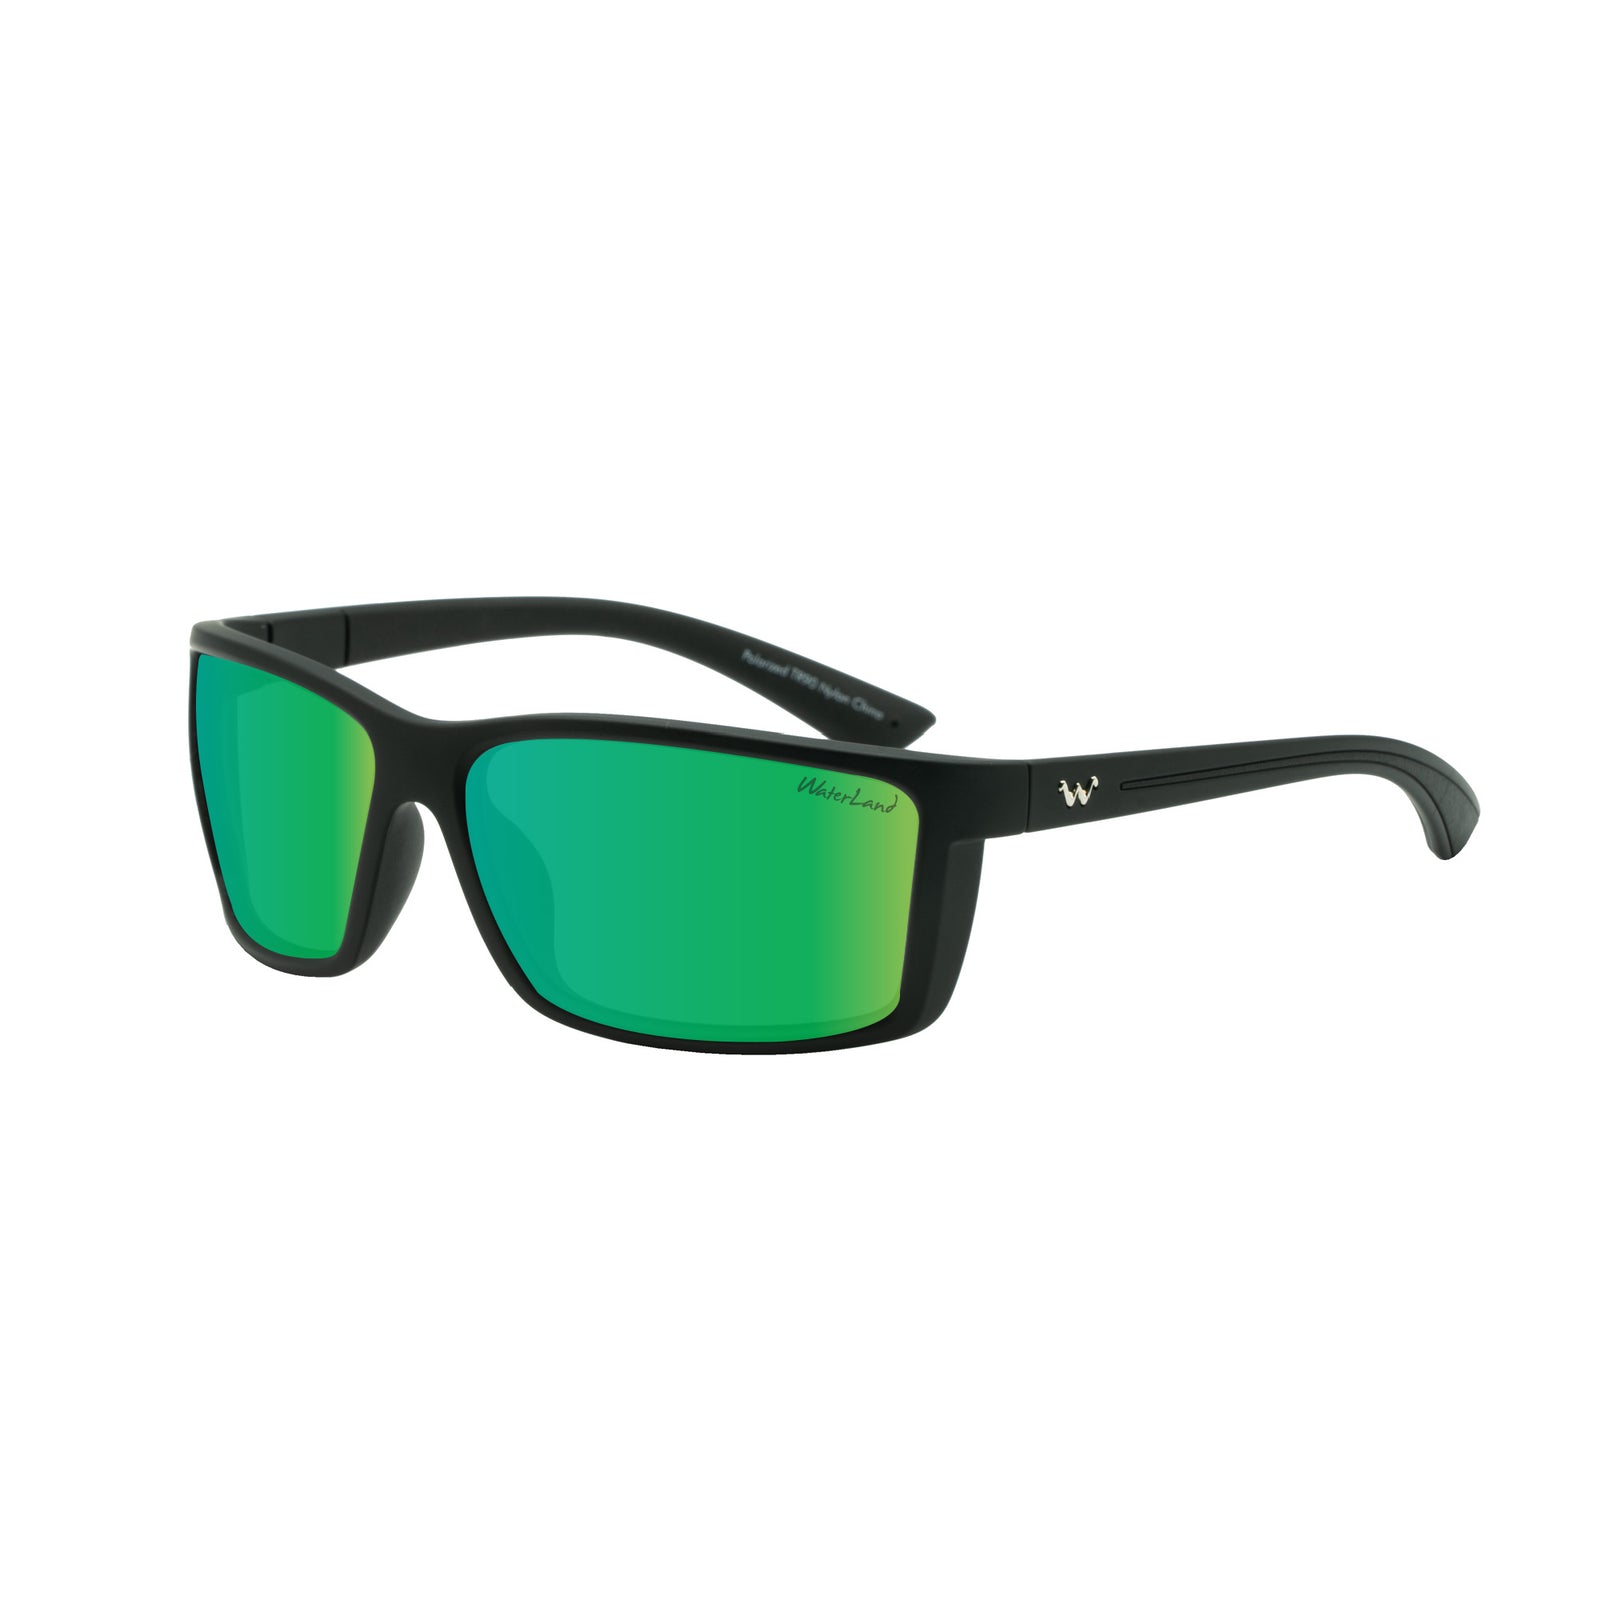 WaterLand Polarized Sunglasses - Laydown Series - Matte Black